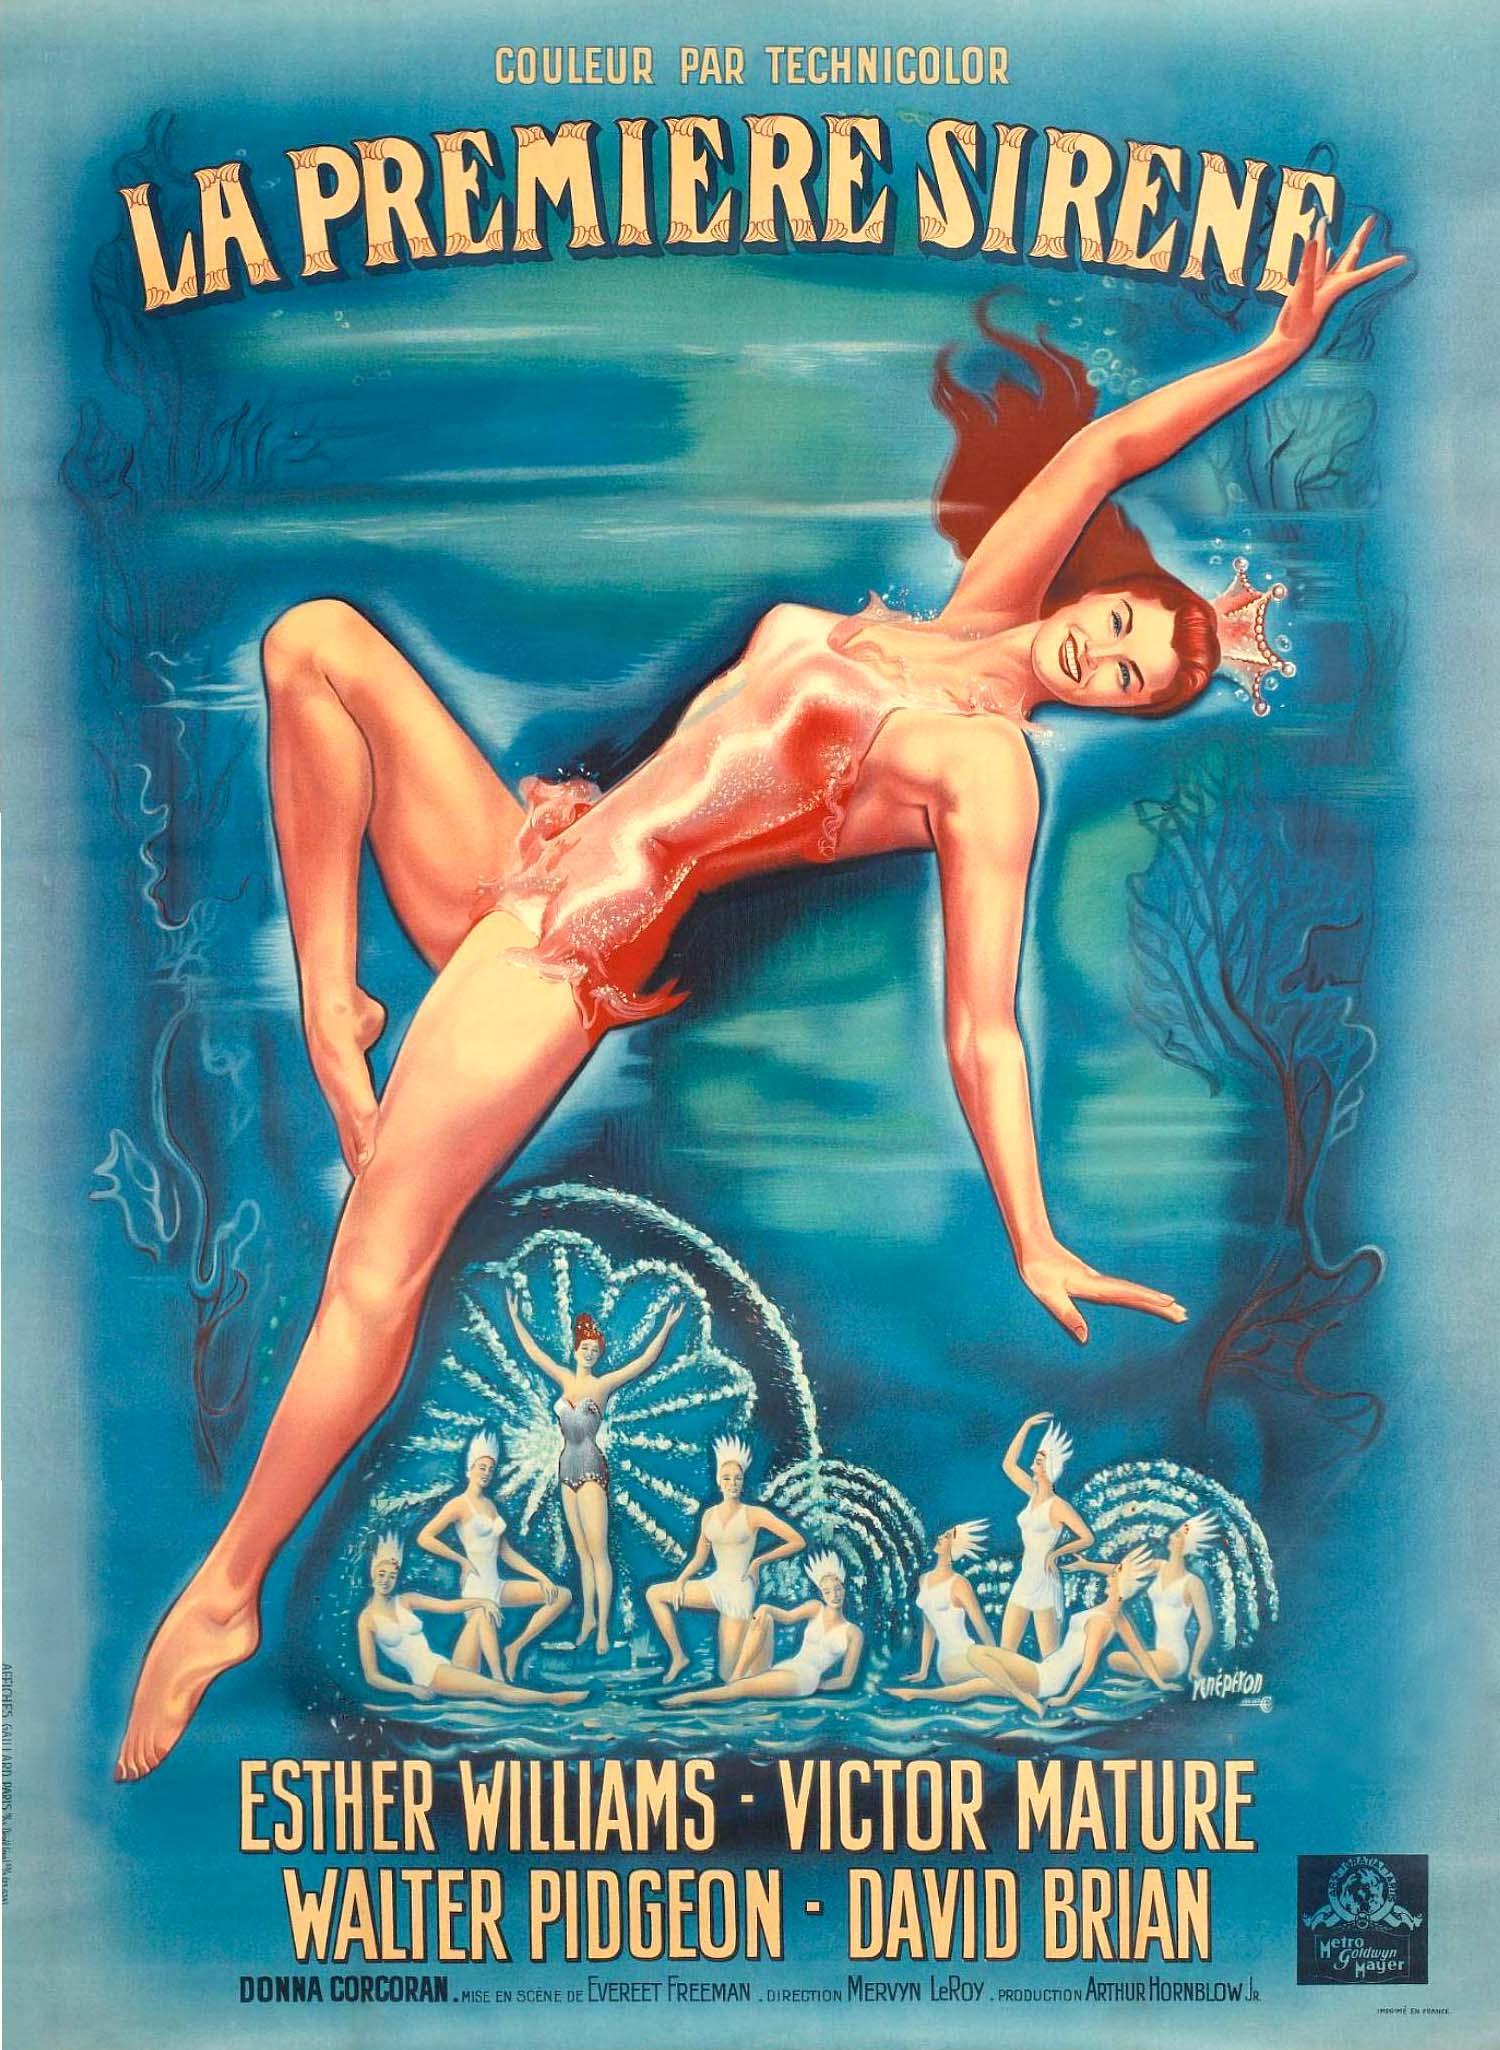 Постер фильма Миллион долларов для русалки | Million Dollar Mermaid